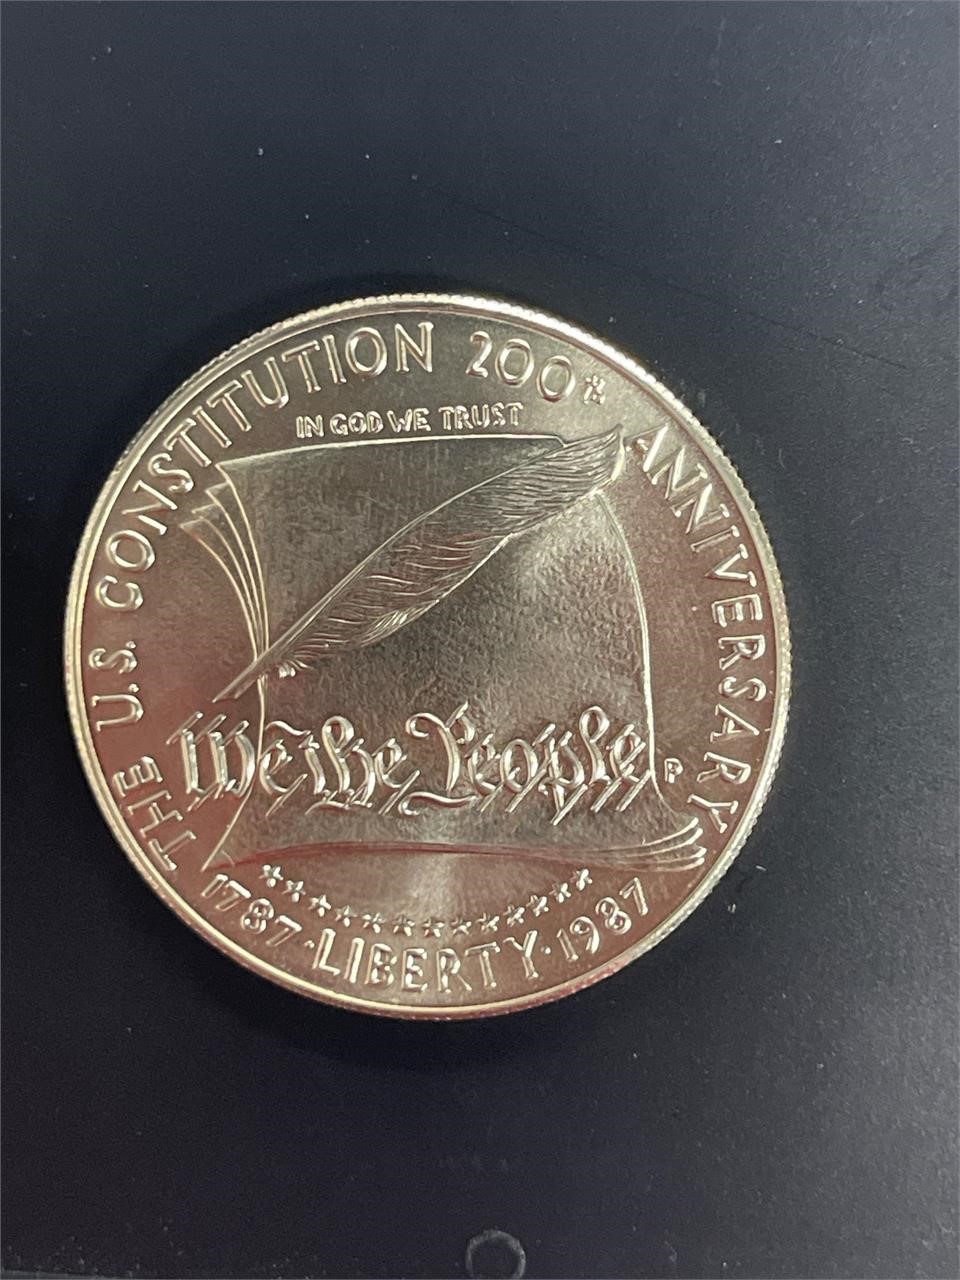 US CONSTITUTION 200 th Anniversary Silver $1